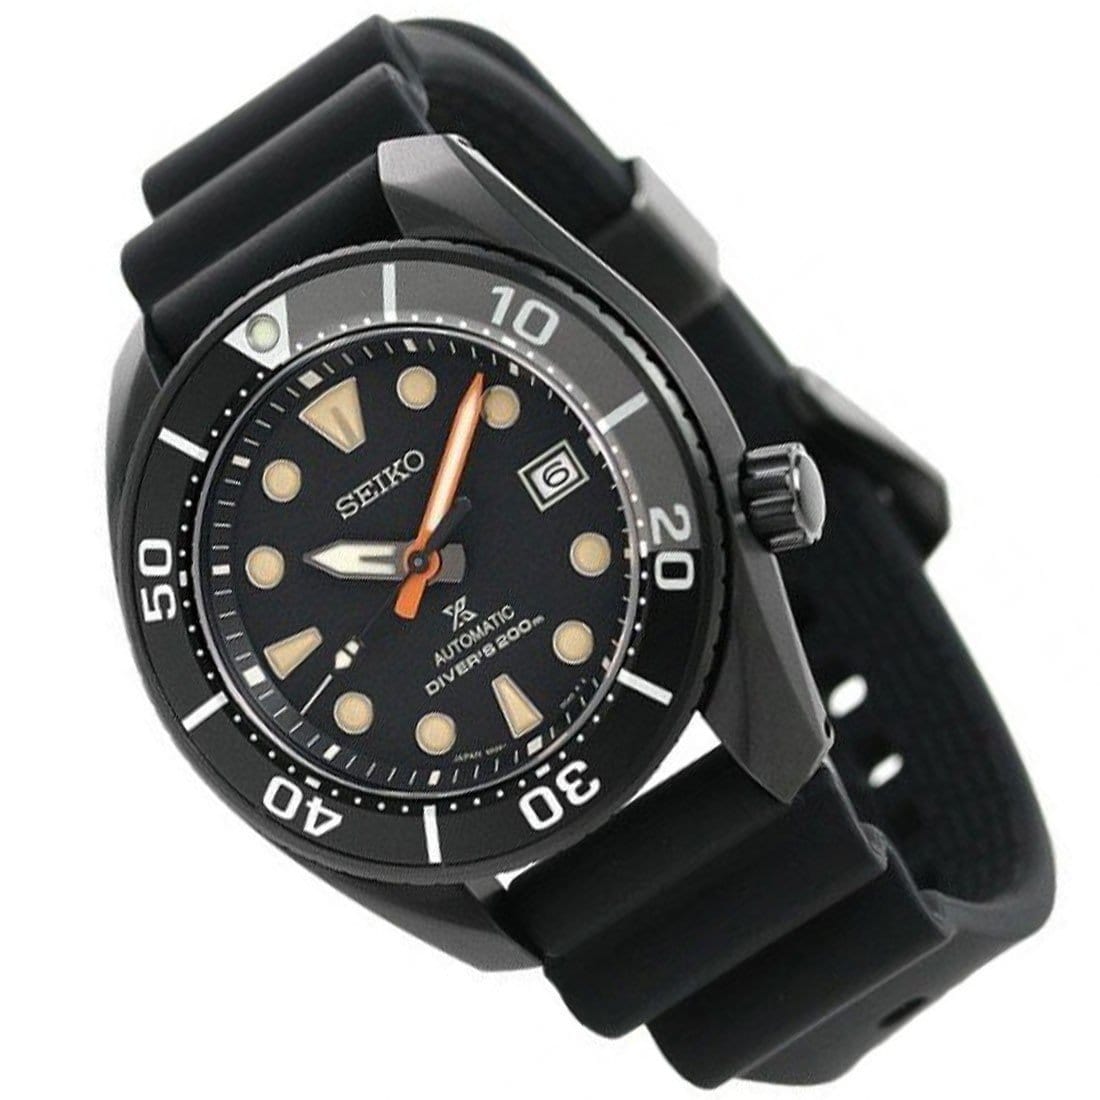 Seiko JDM Sumo Prospex Automatic 200M Analog Male Divers Watch SBDC095